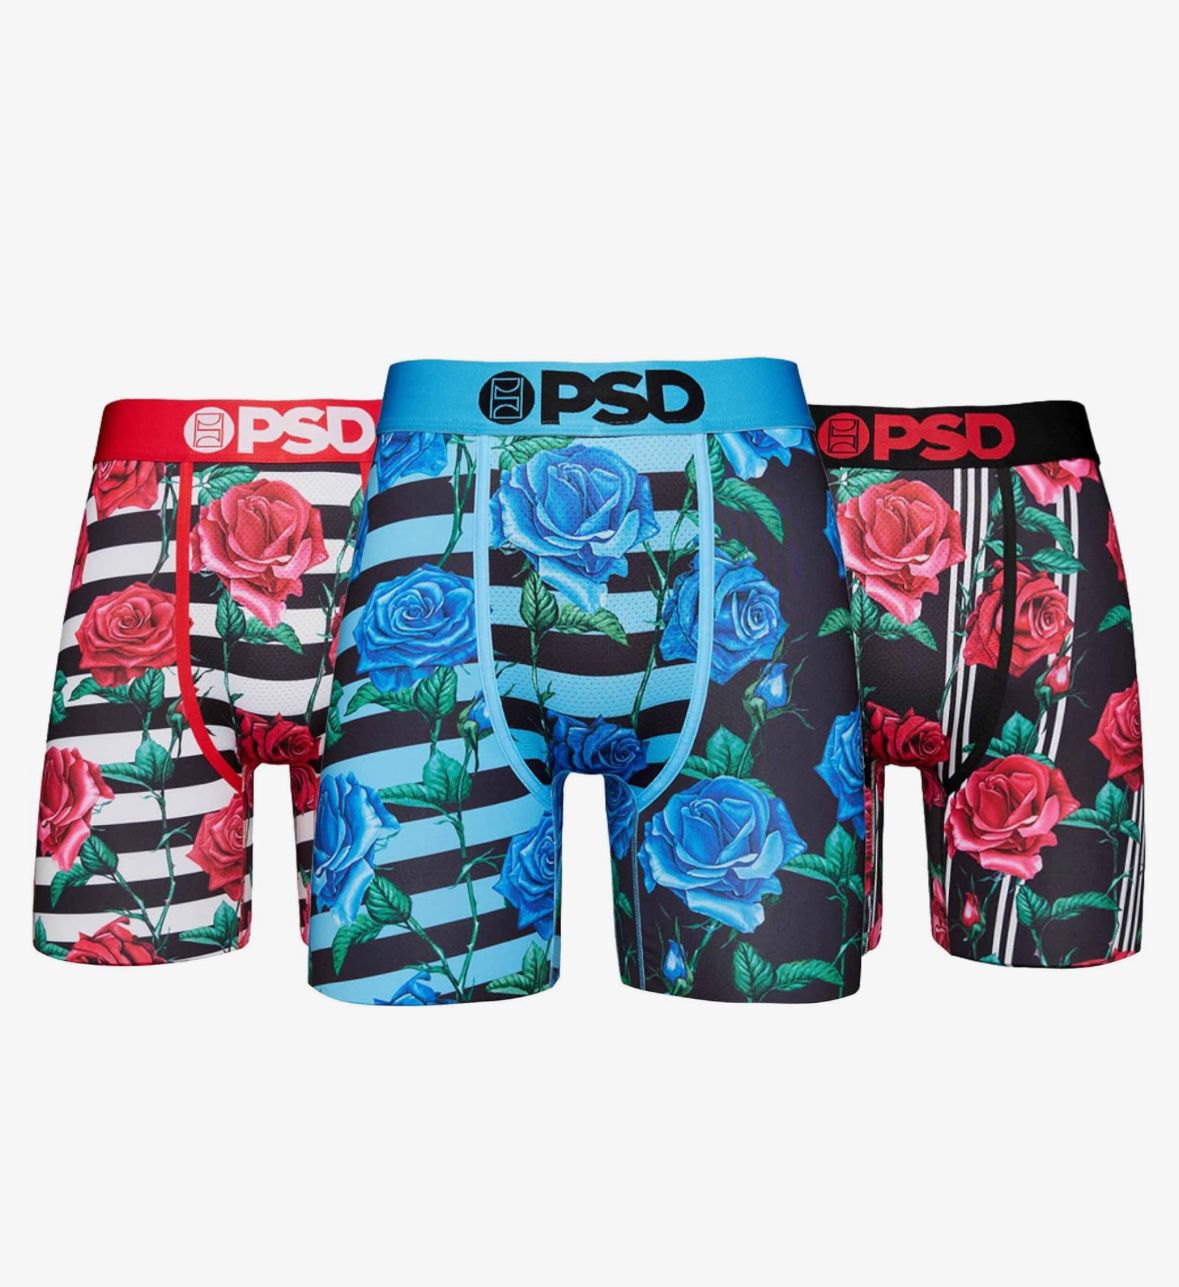 PSD Underwear Striped Rose 3 Pack Men’s Core Standard Briefs Size M